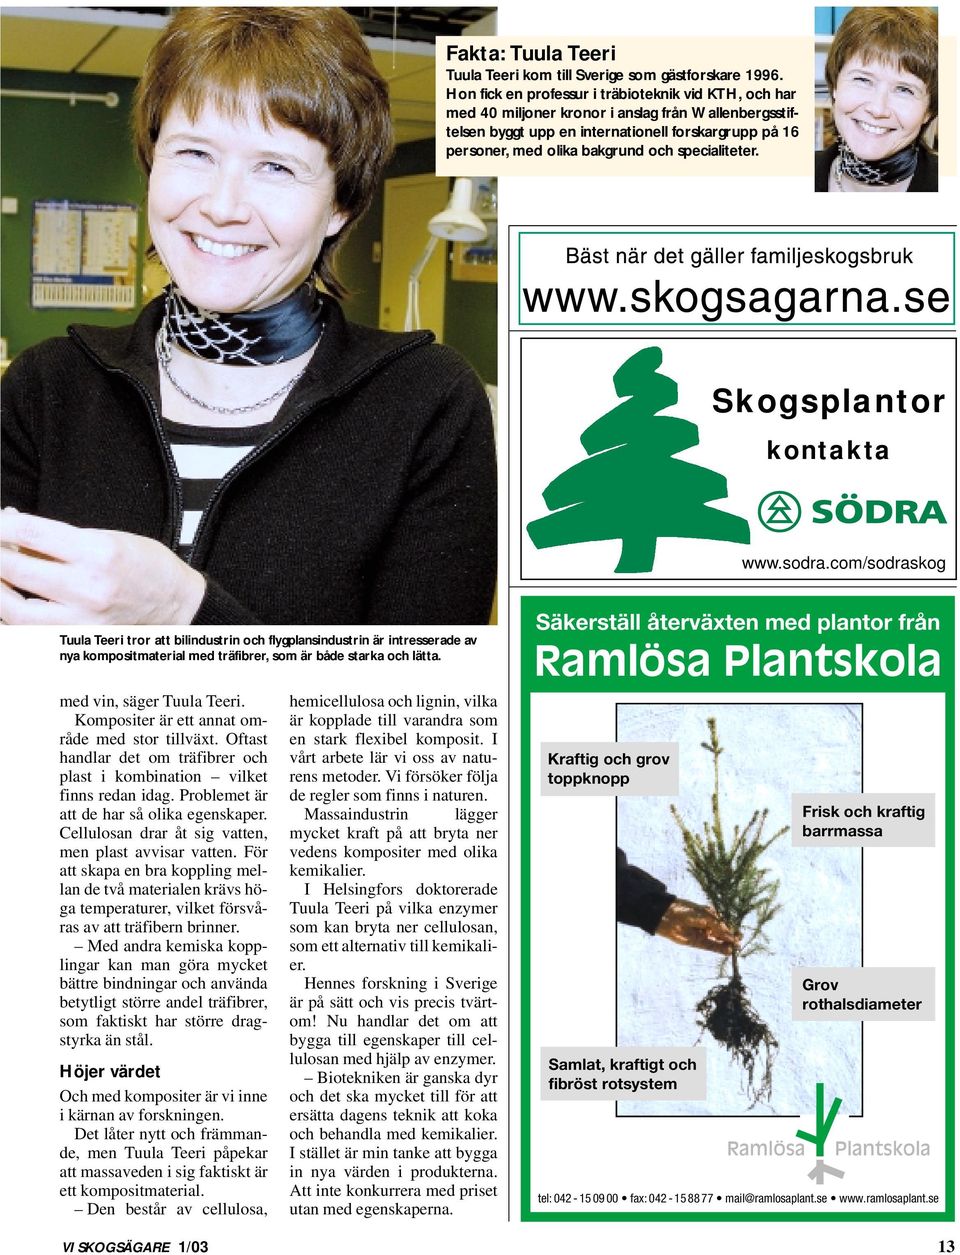 specialiteter. Skogsplantor kontakta www.sodra.